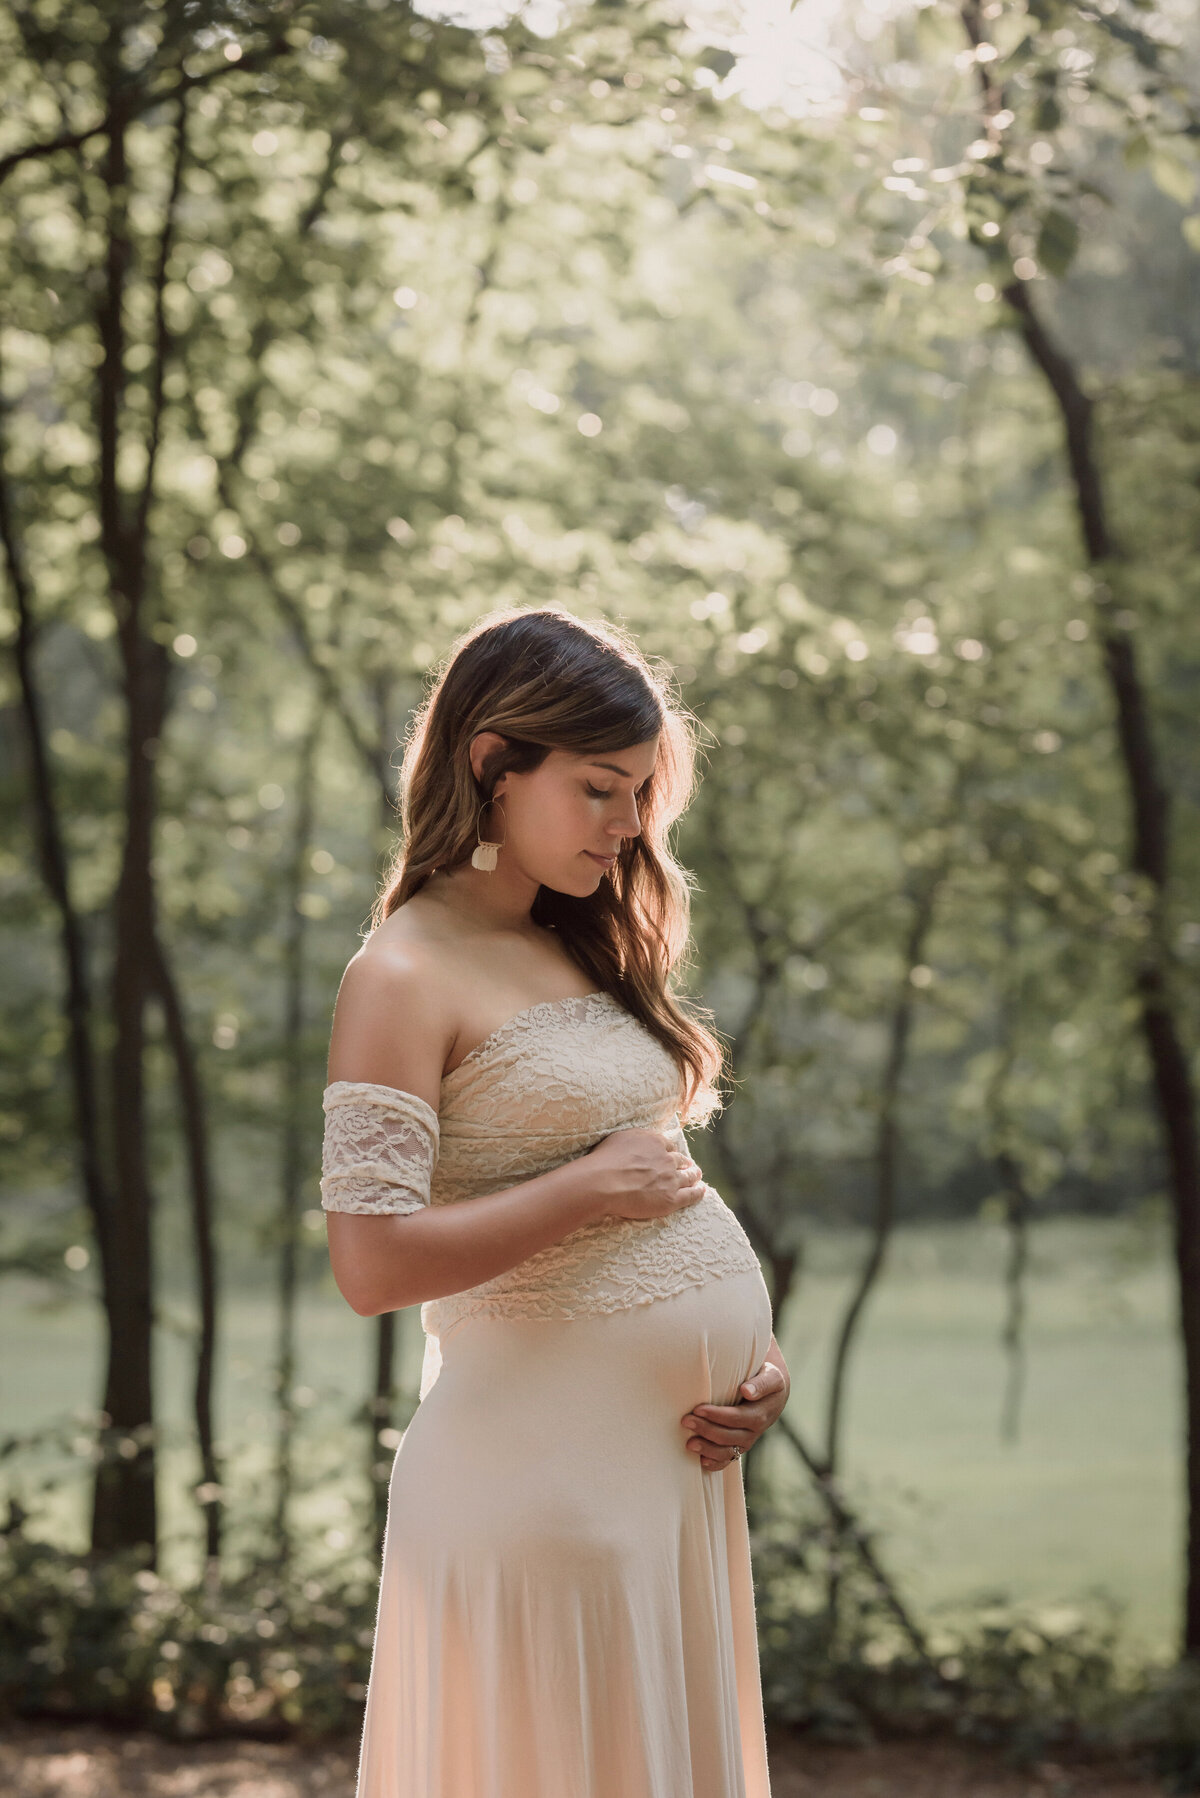 boston-portrait-photographer-maternity-session-bump-pregnancy-maternity-portraits-field-woods-ma-ri-ny